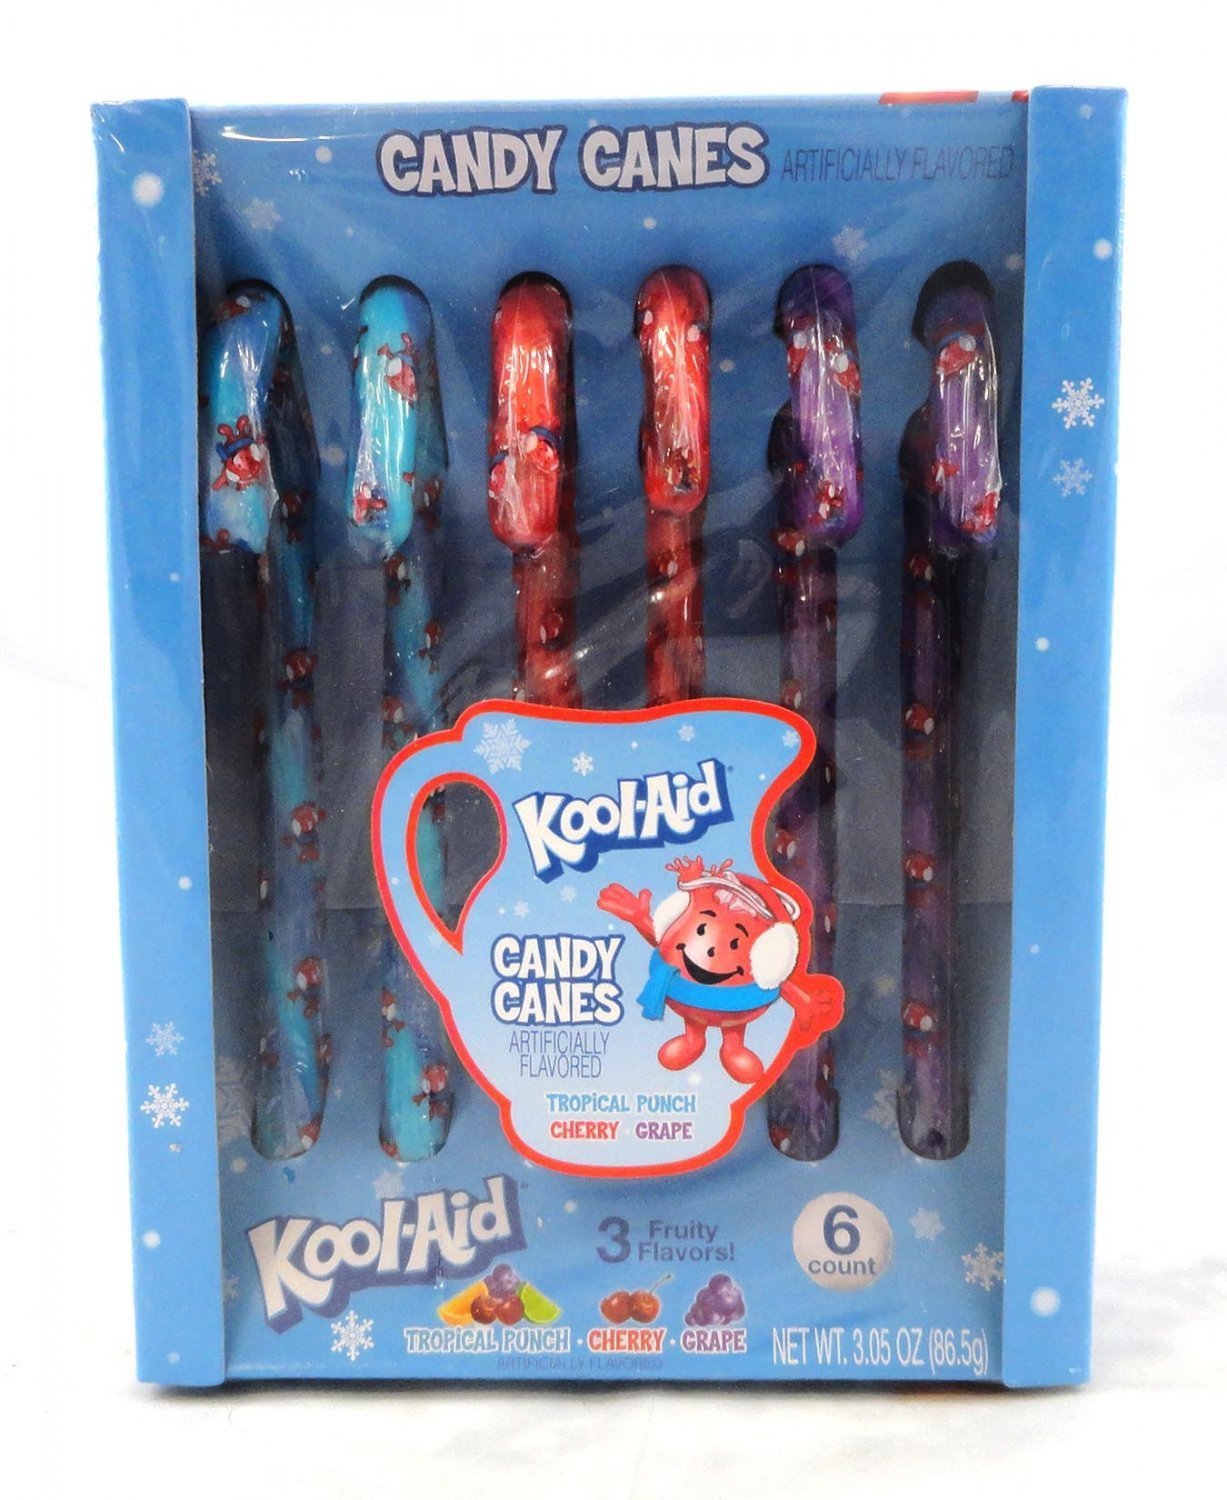 Kool-Aid Kool-Aid 6ct. Candy Cane Box